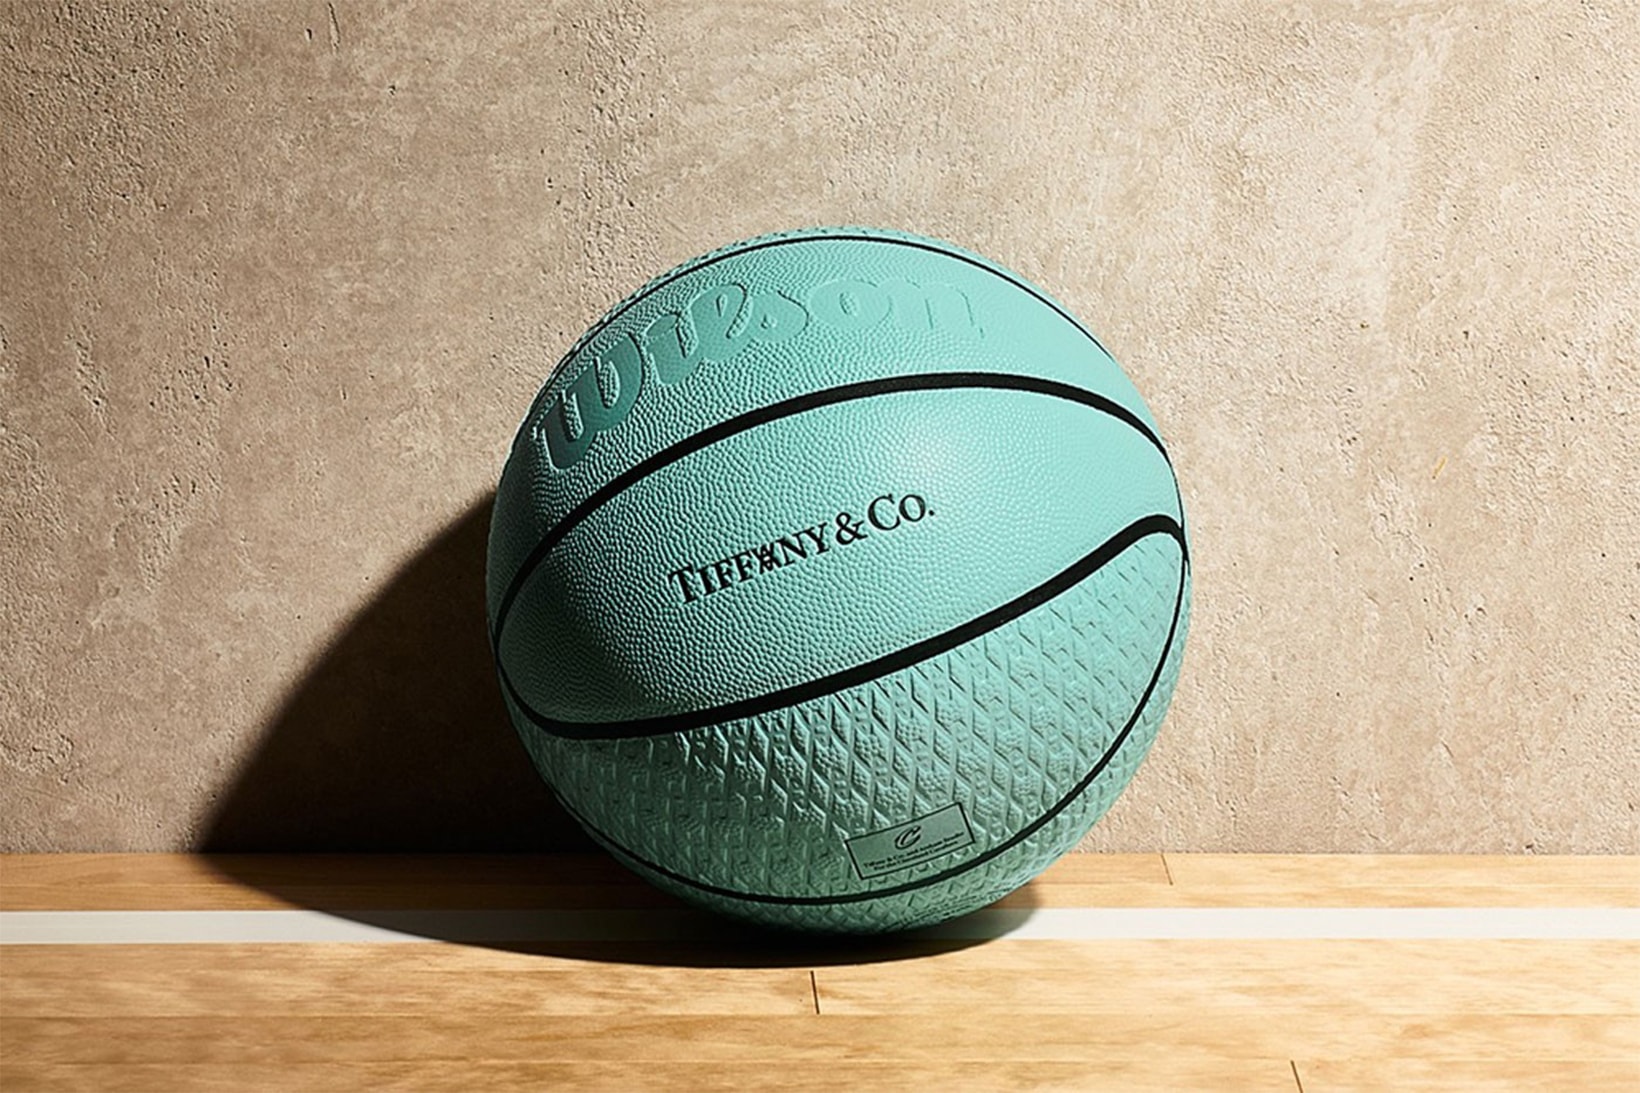 Daniel Arsham Tiffany & Co. Basketball NBA All-Star Weekend Product Shot